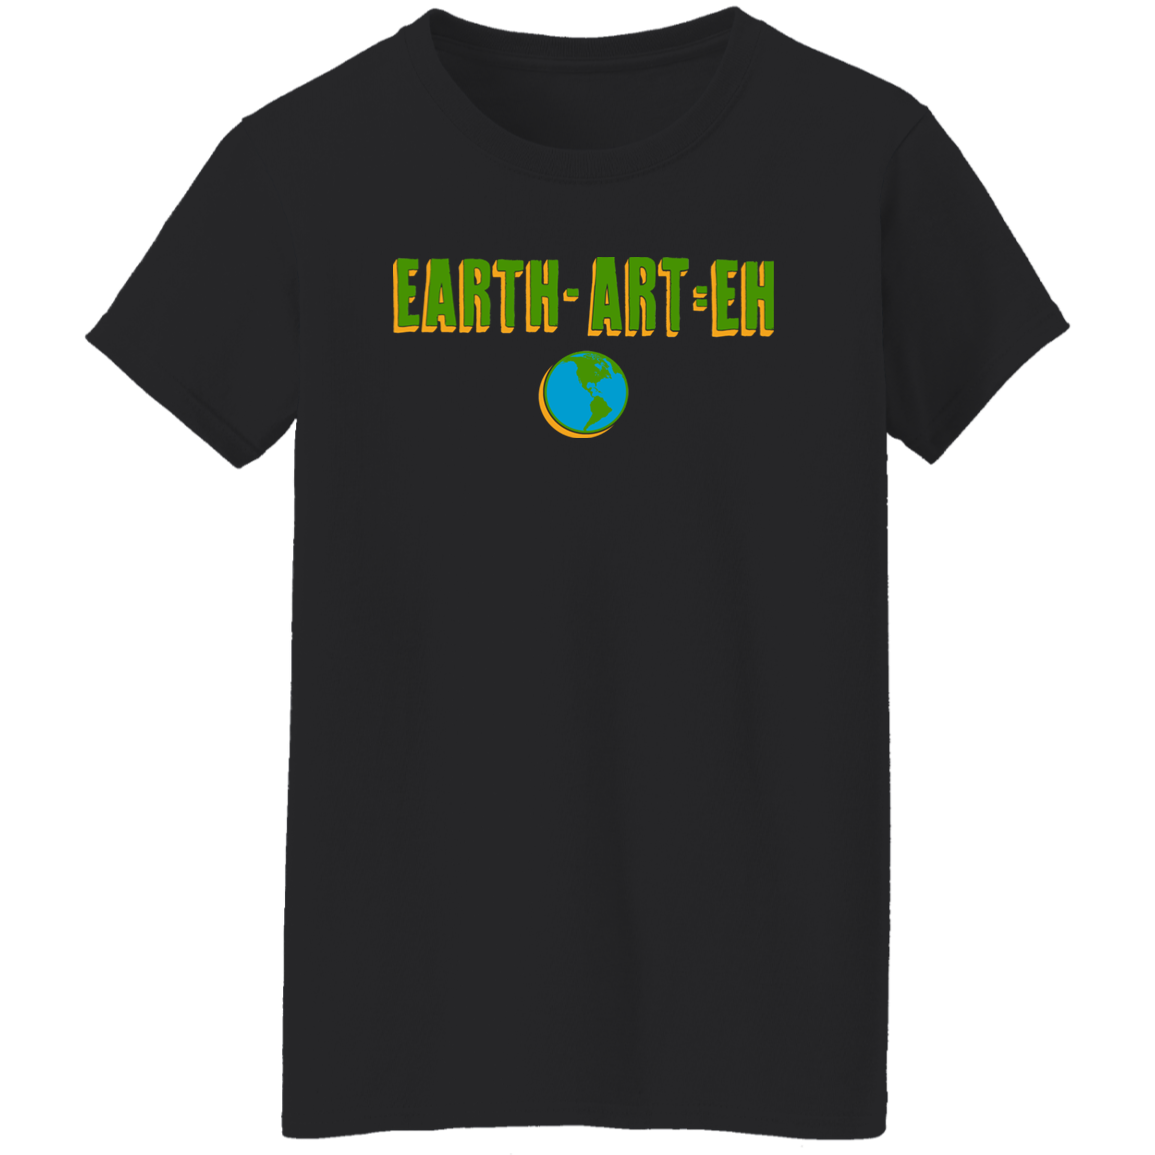 ArtichokeUSA Custom Design. EARTH-ART=EH. Ladies' Basic 100% Cotton T-Shirt